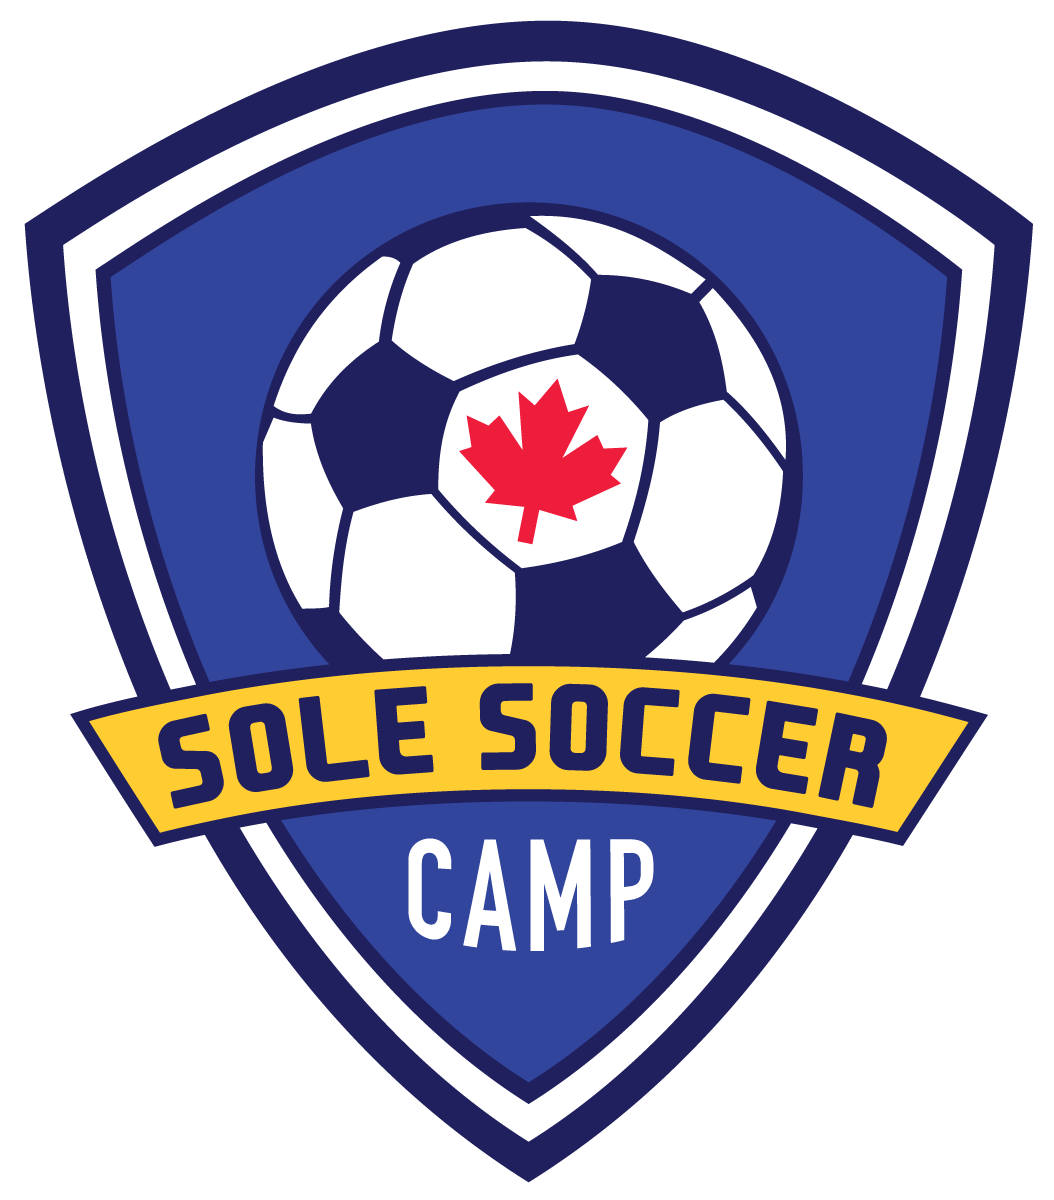 Soccer Camp Logo - Sole Soccer Camp